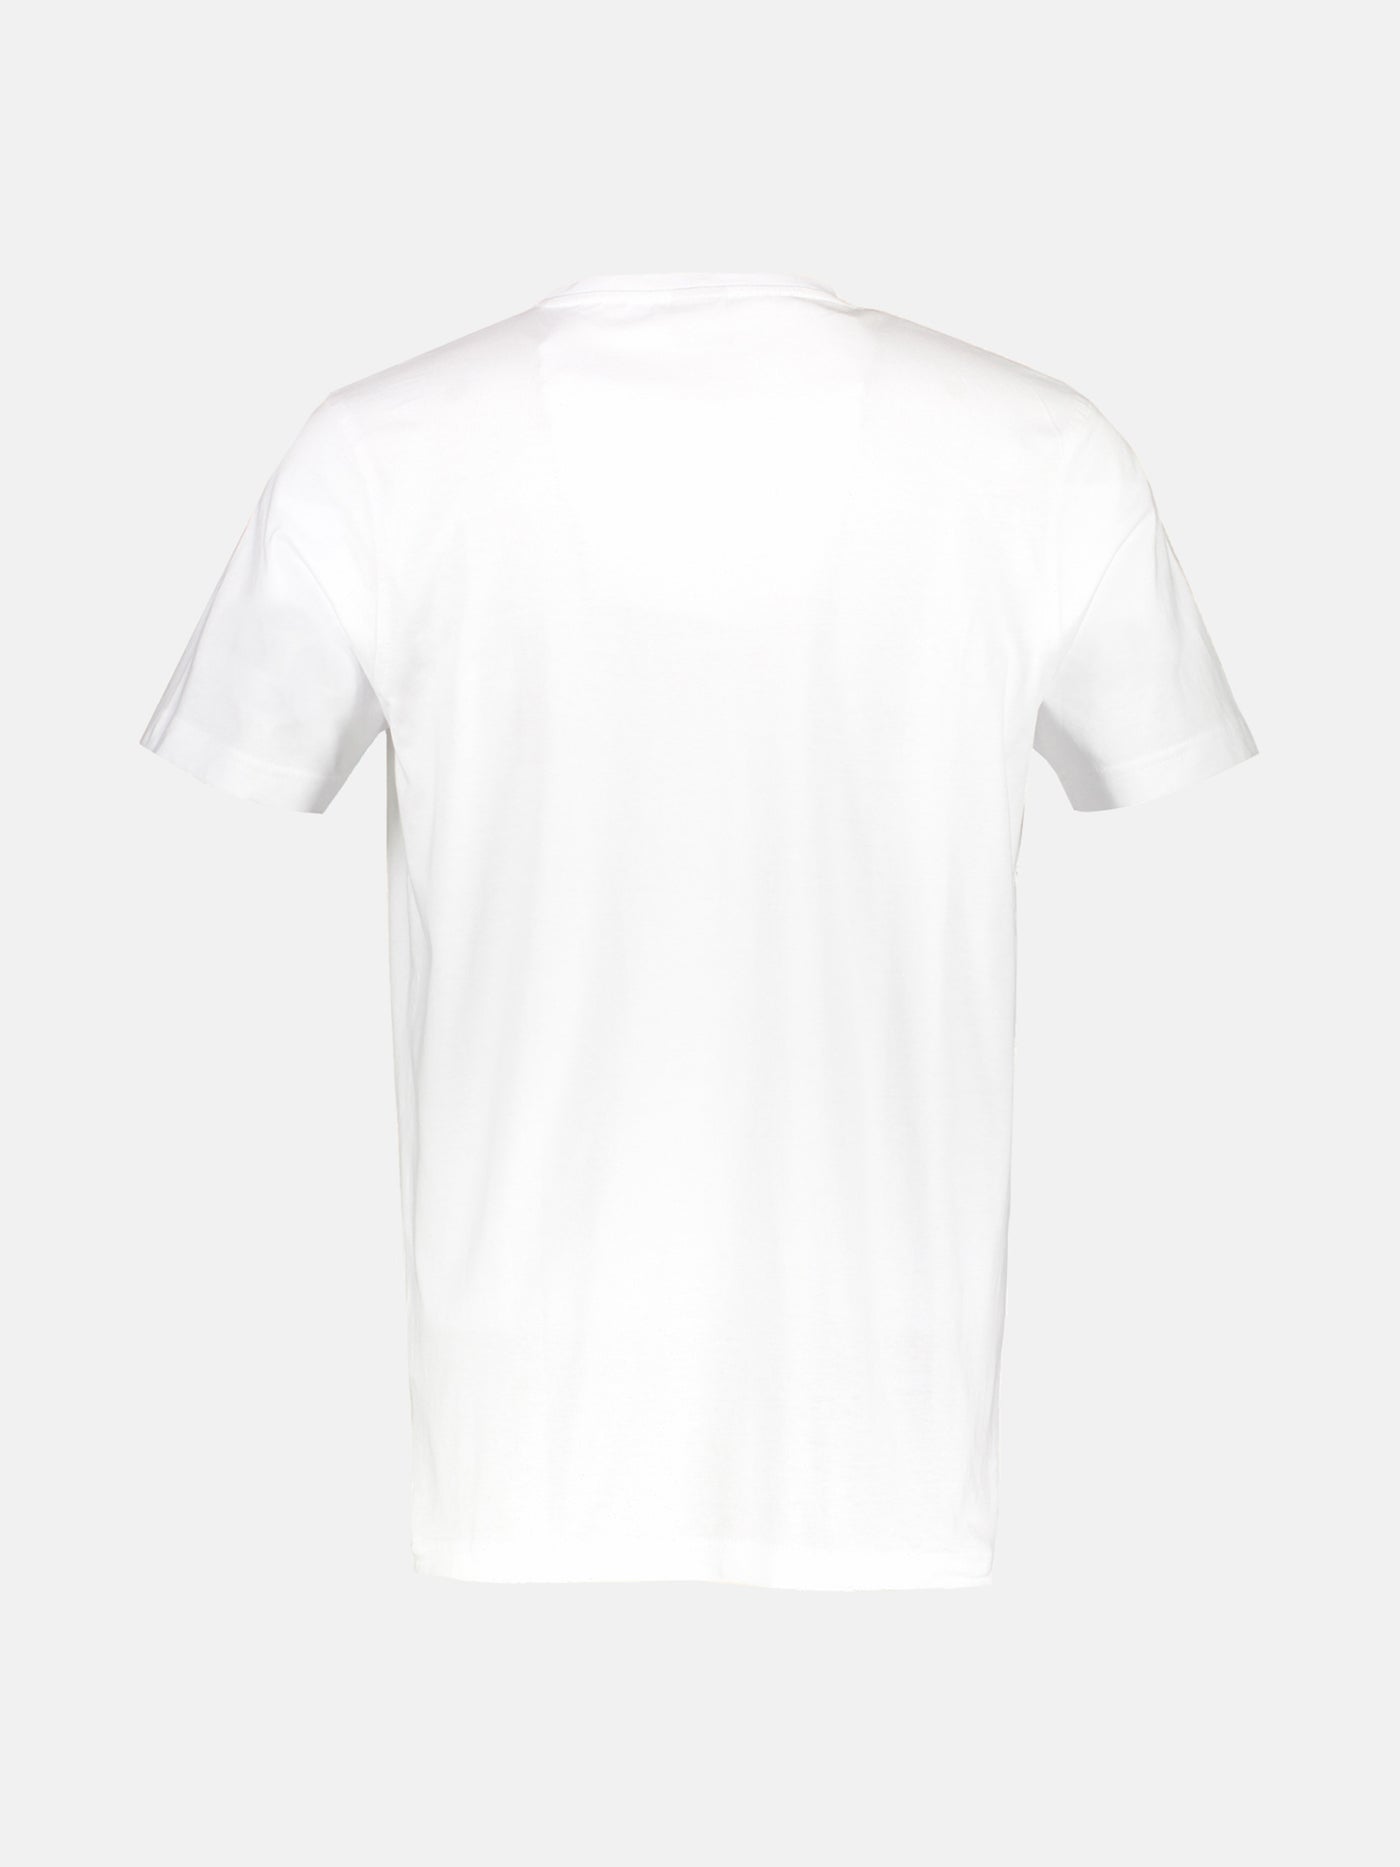 Dubbelpak T-shirts met ronde hals in premium katoenkwaliteit